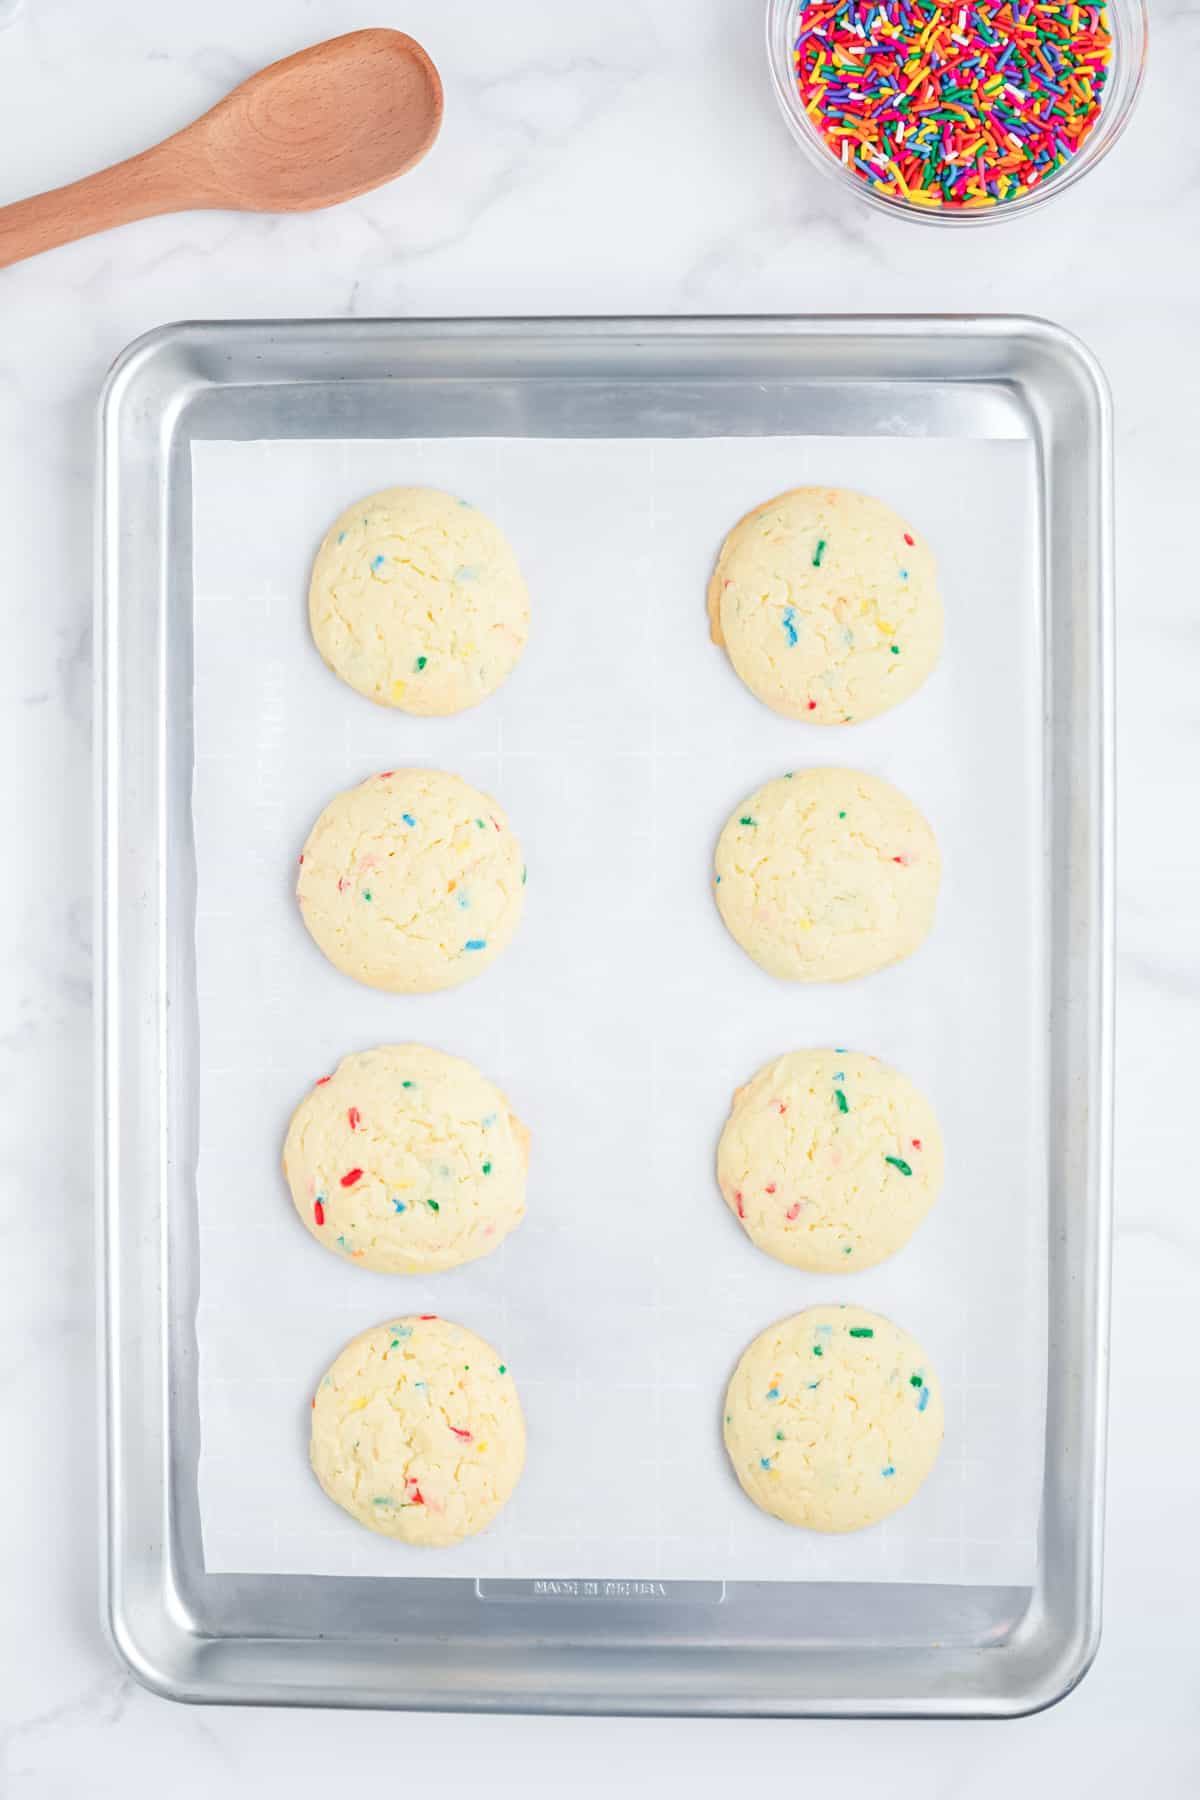 Funfetti cake mix cookies on a baking tray.